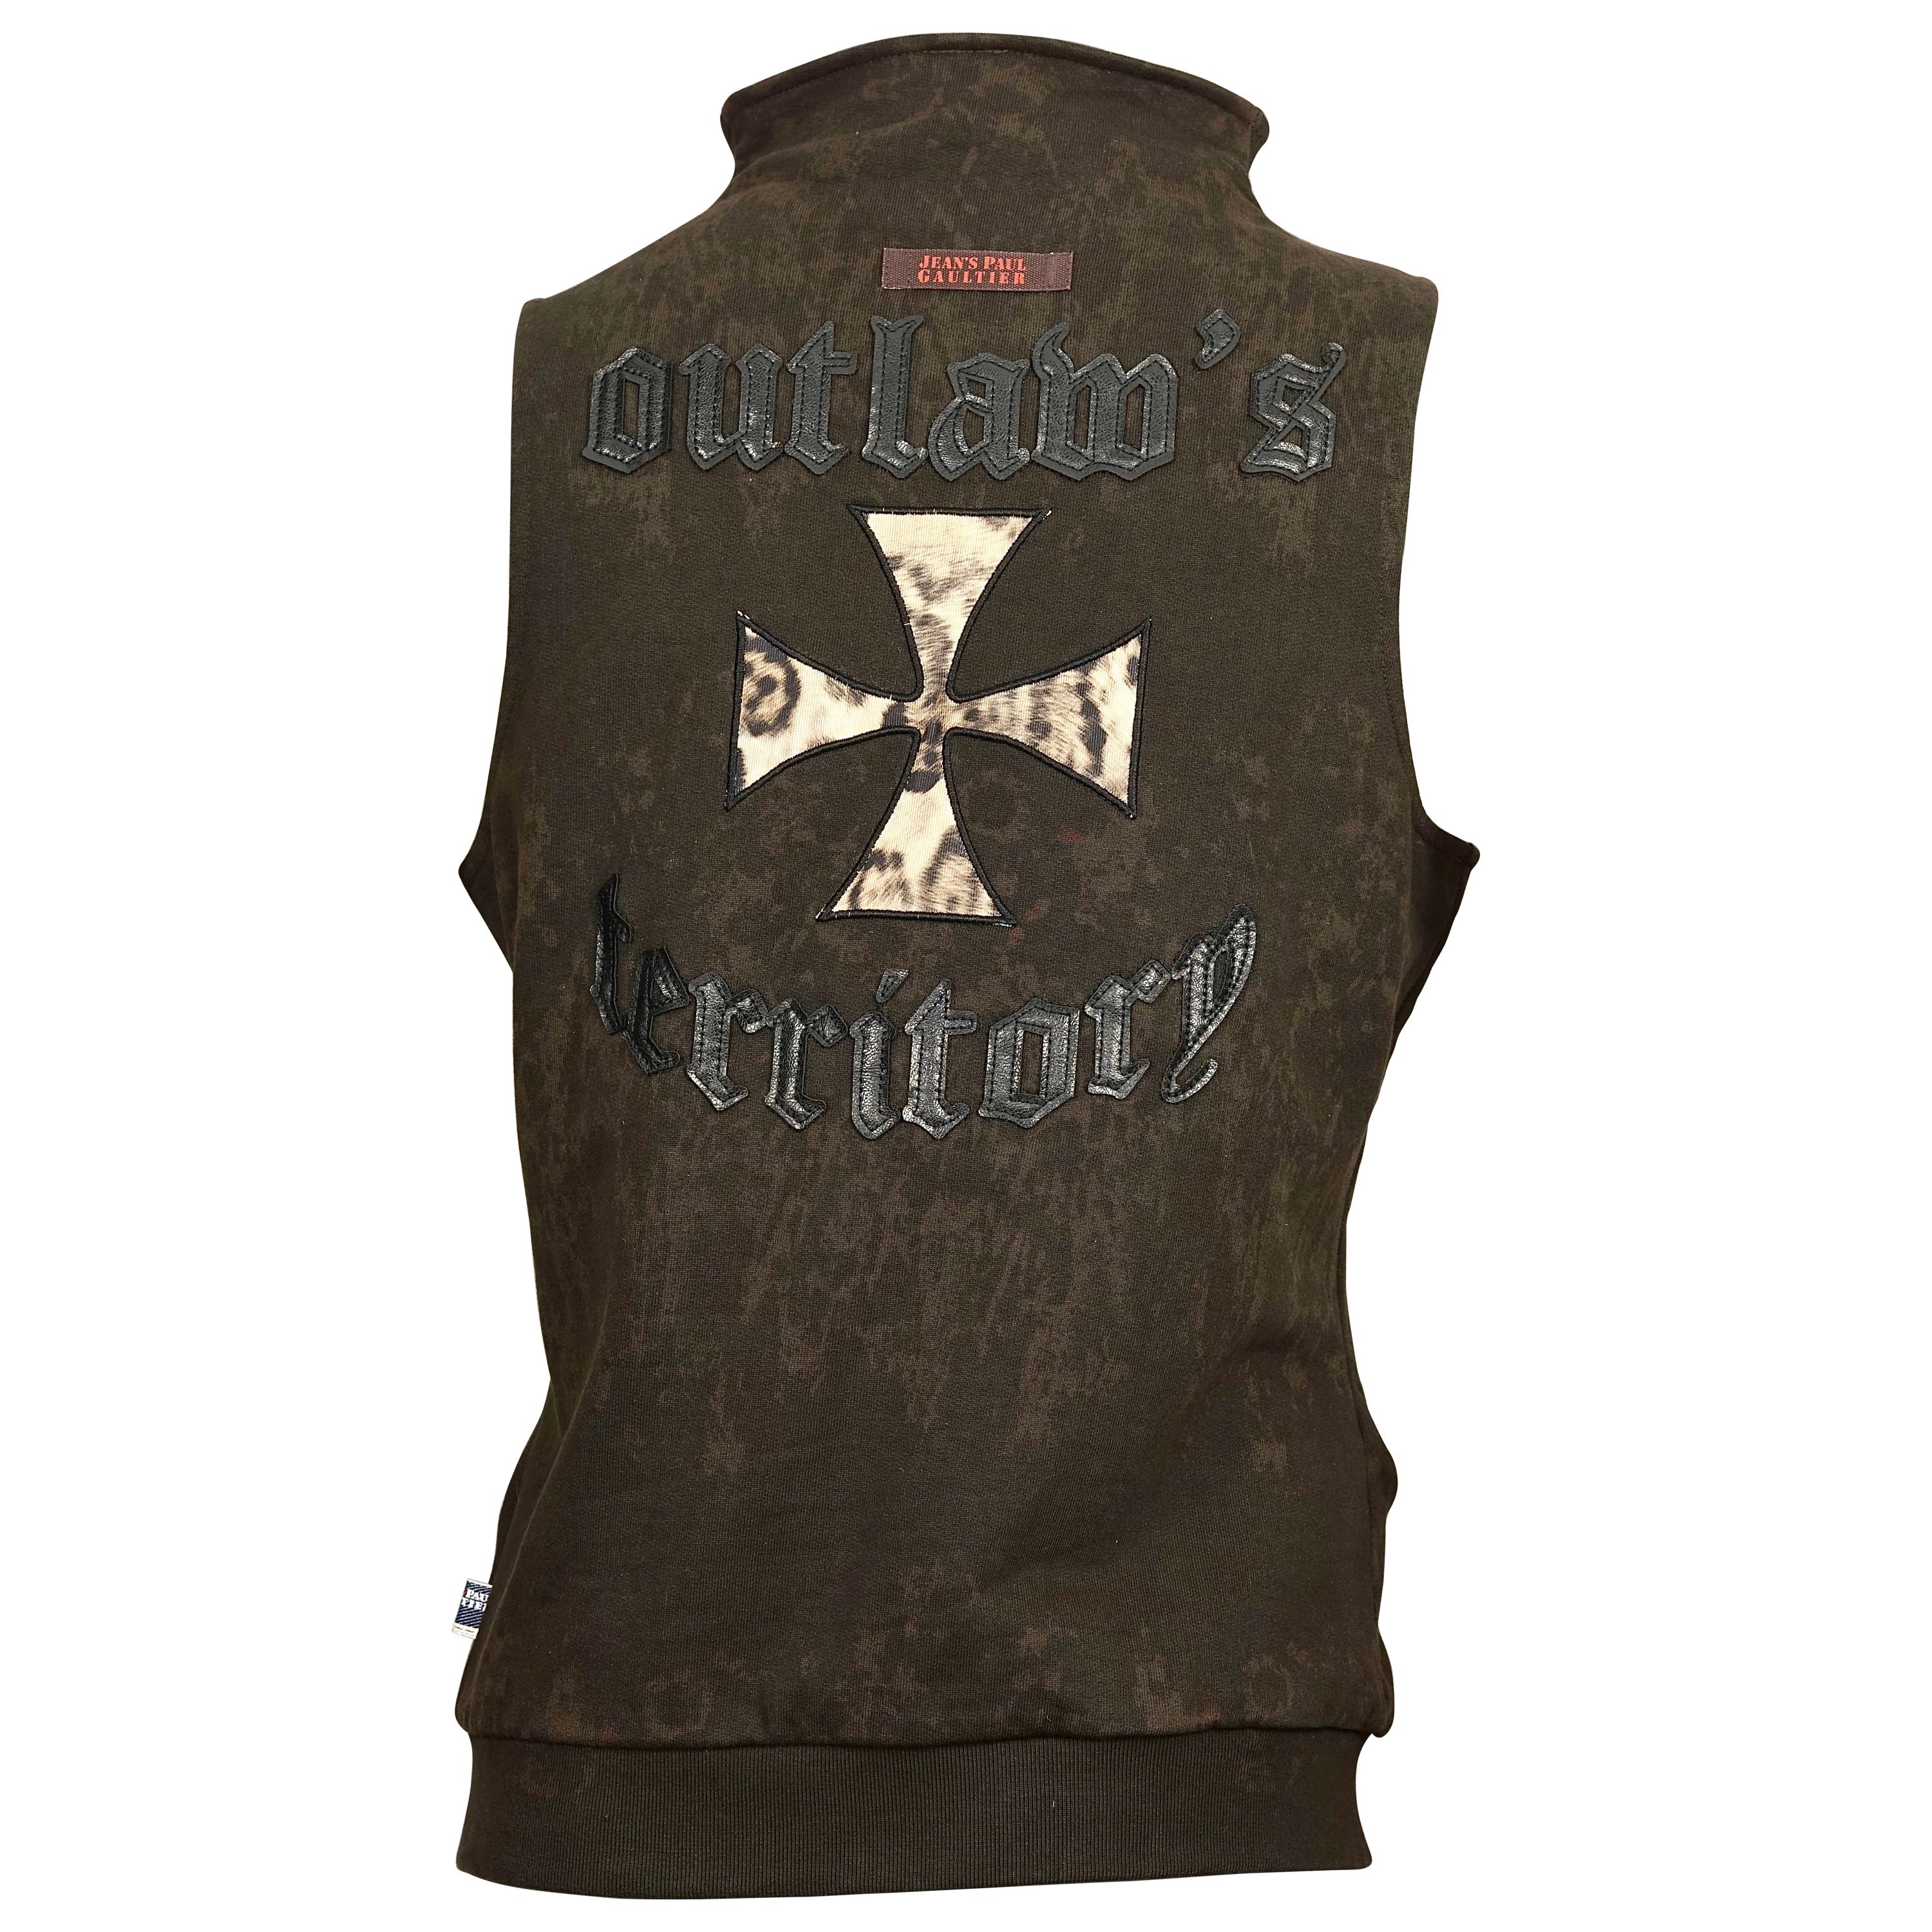 Vintage JEAN PAUL GAULTIER "Outlaws Territory" Cross Leopard Print Vest Jacket For Sale